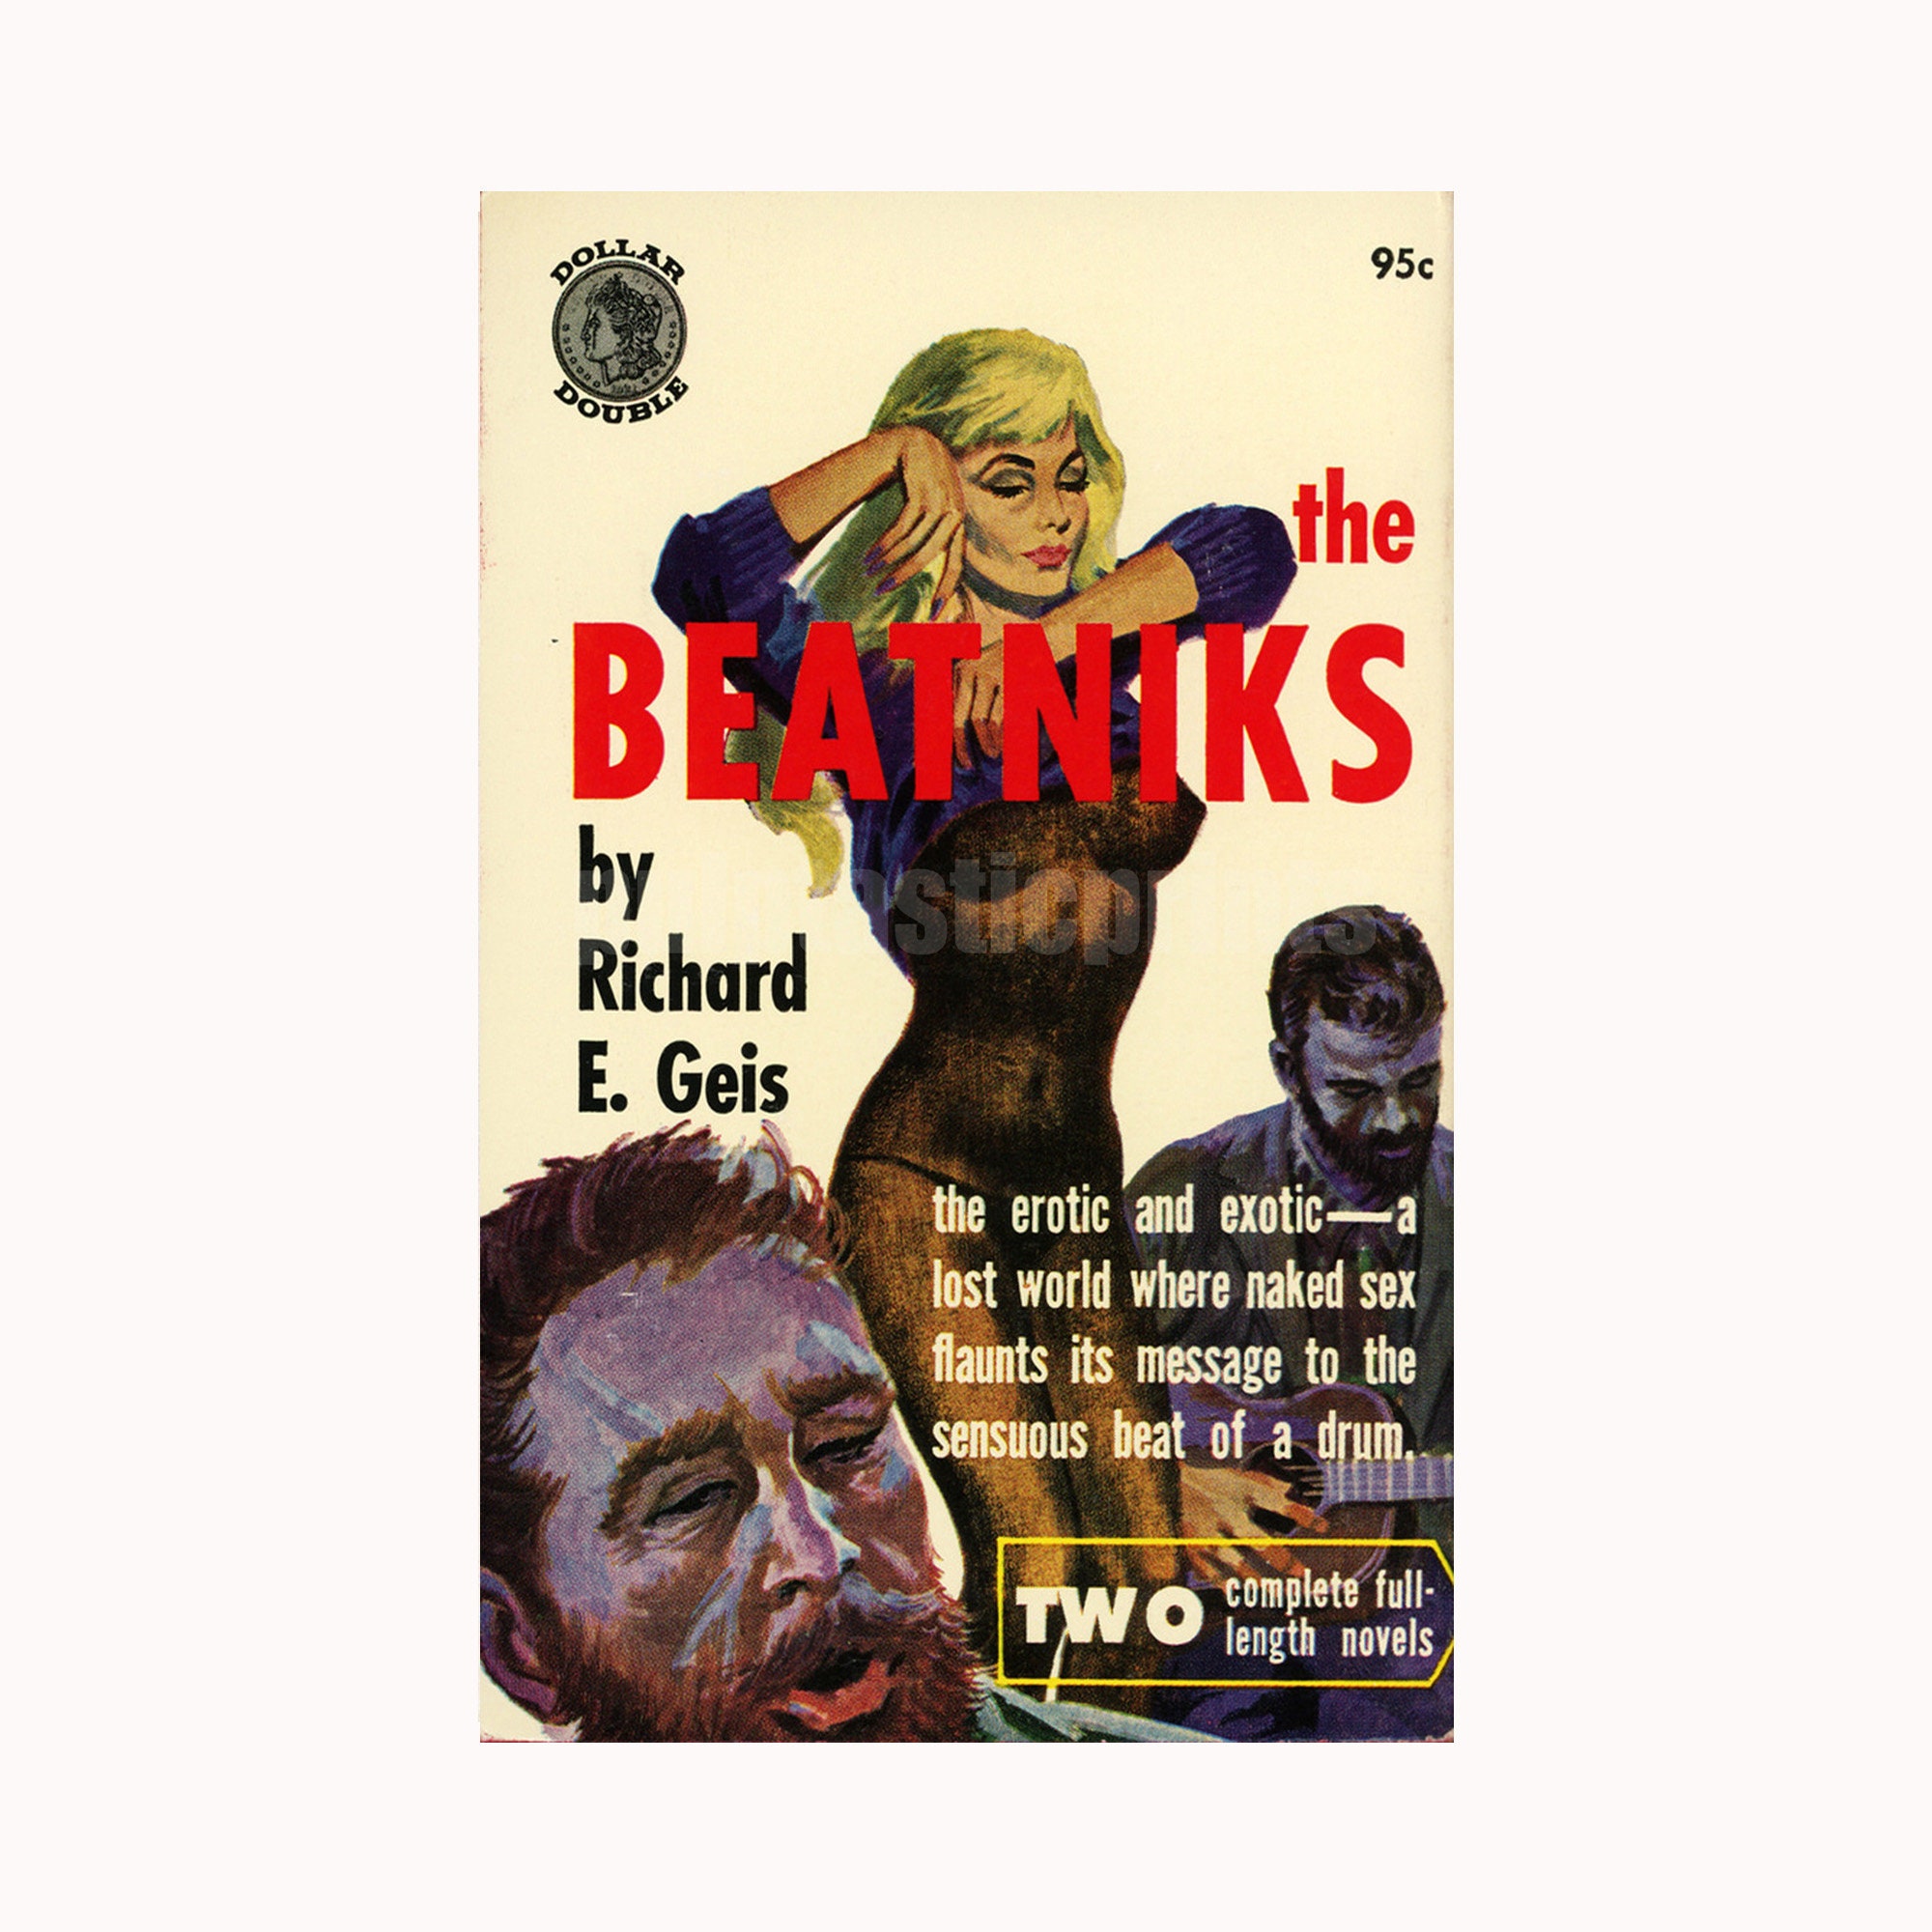 The Beatniks Vintage Pulp Paperback Cover Print Retro Pulp image picture